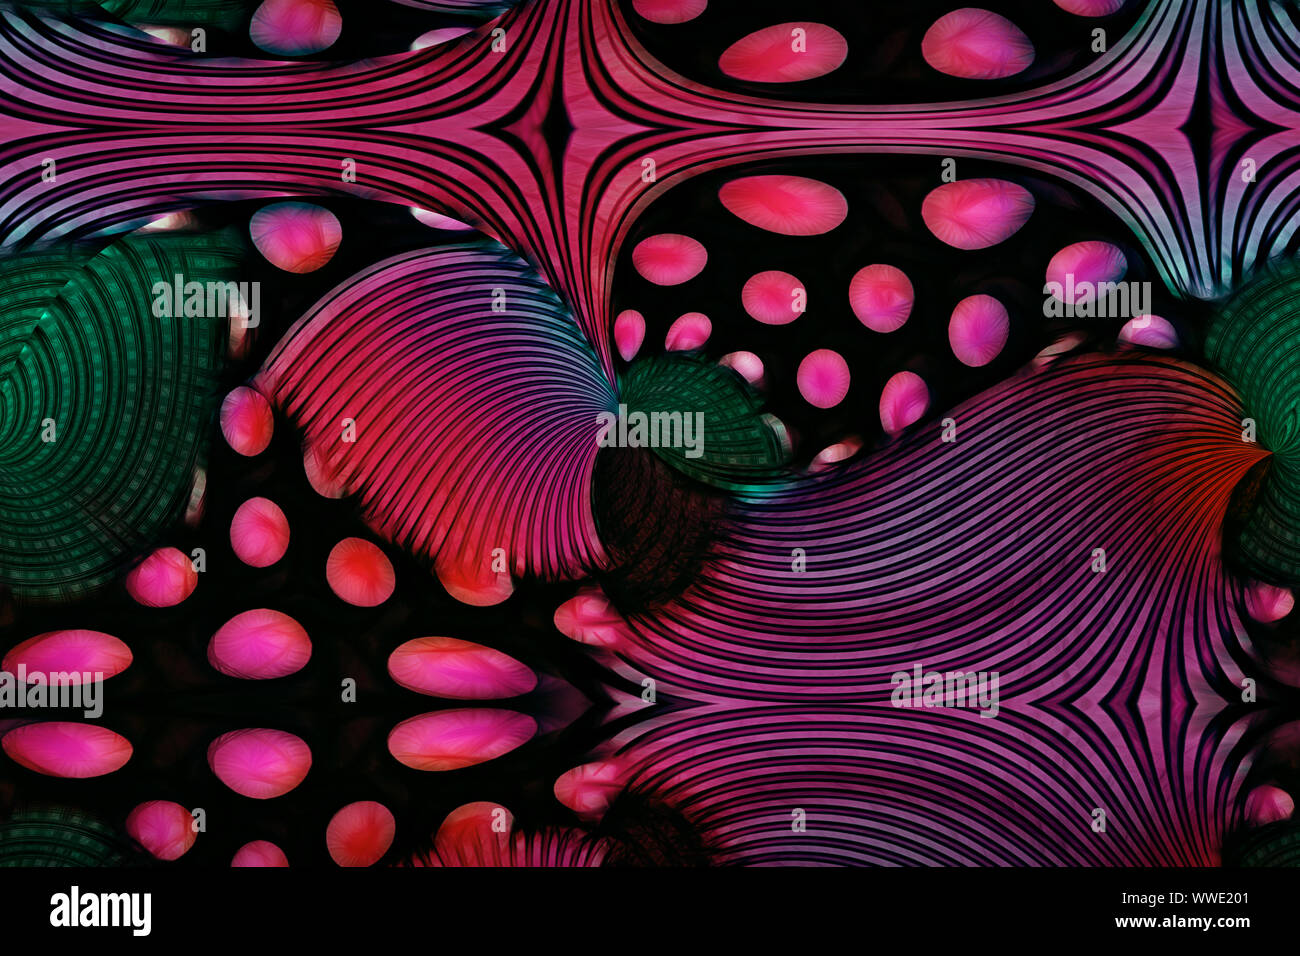 Waves, digital creation, fractal composition Stock Photo